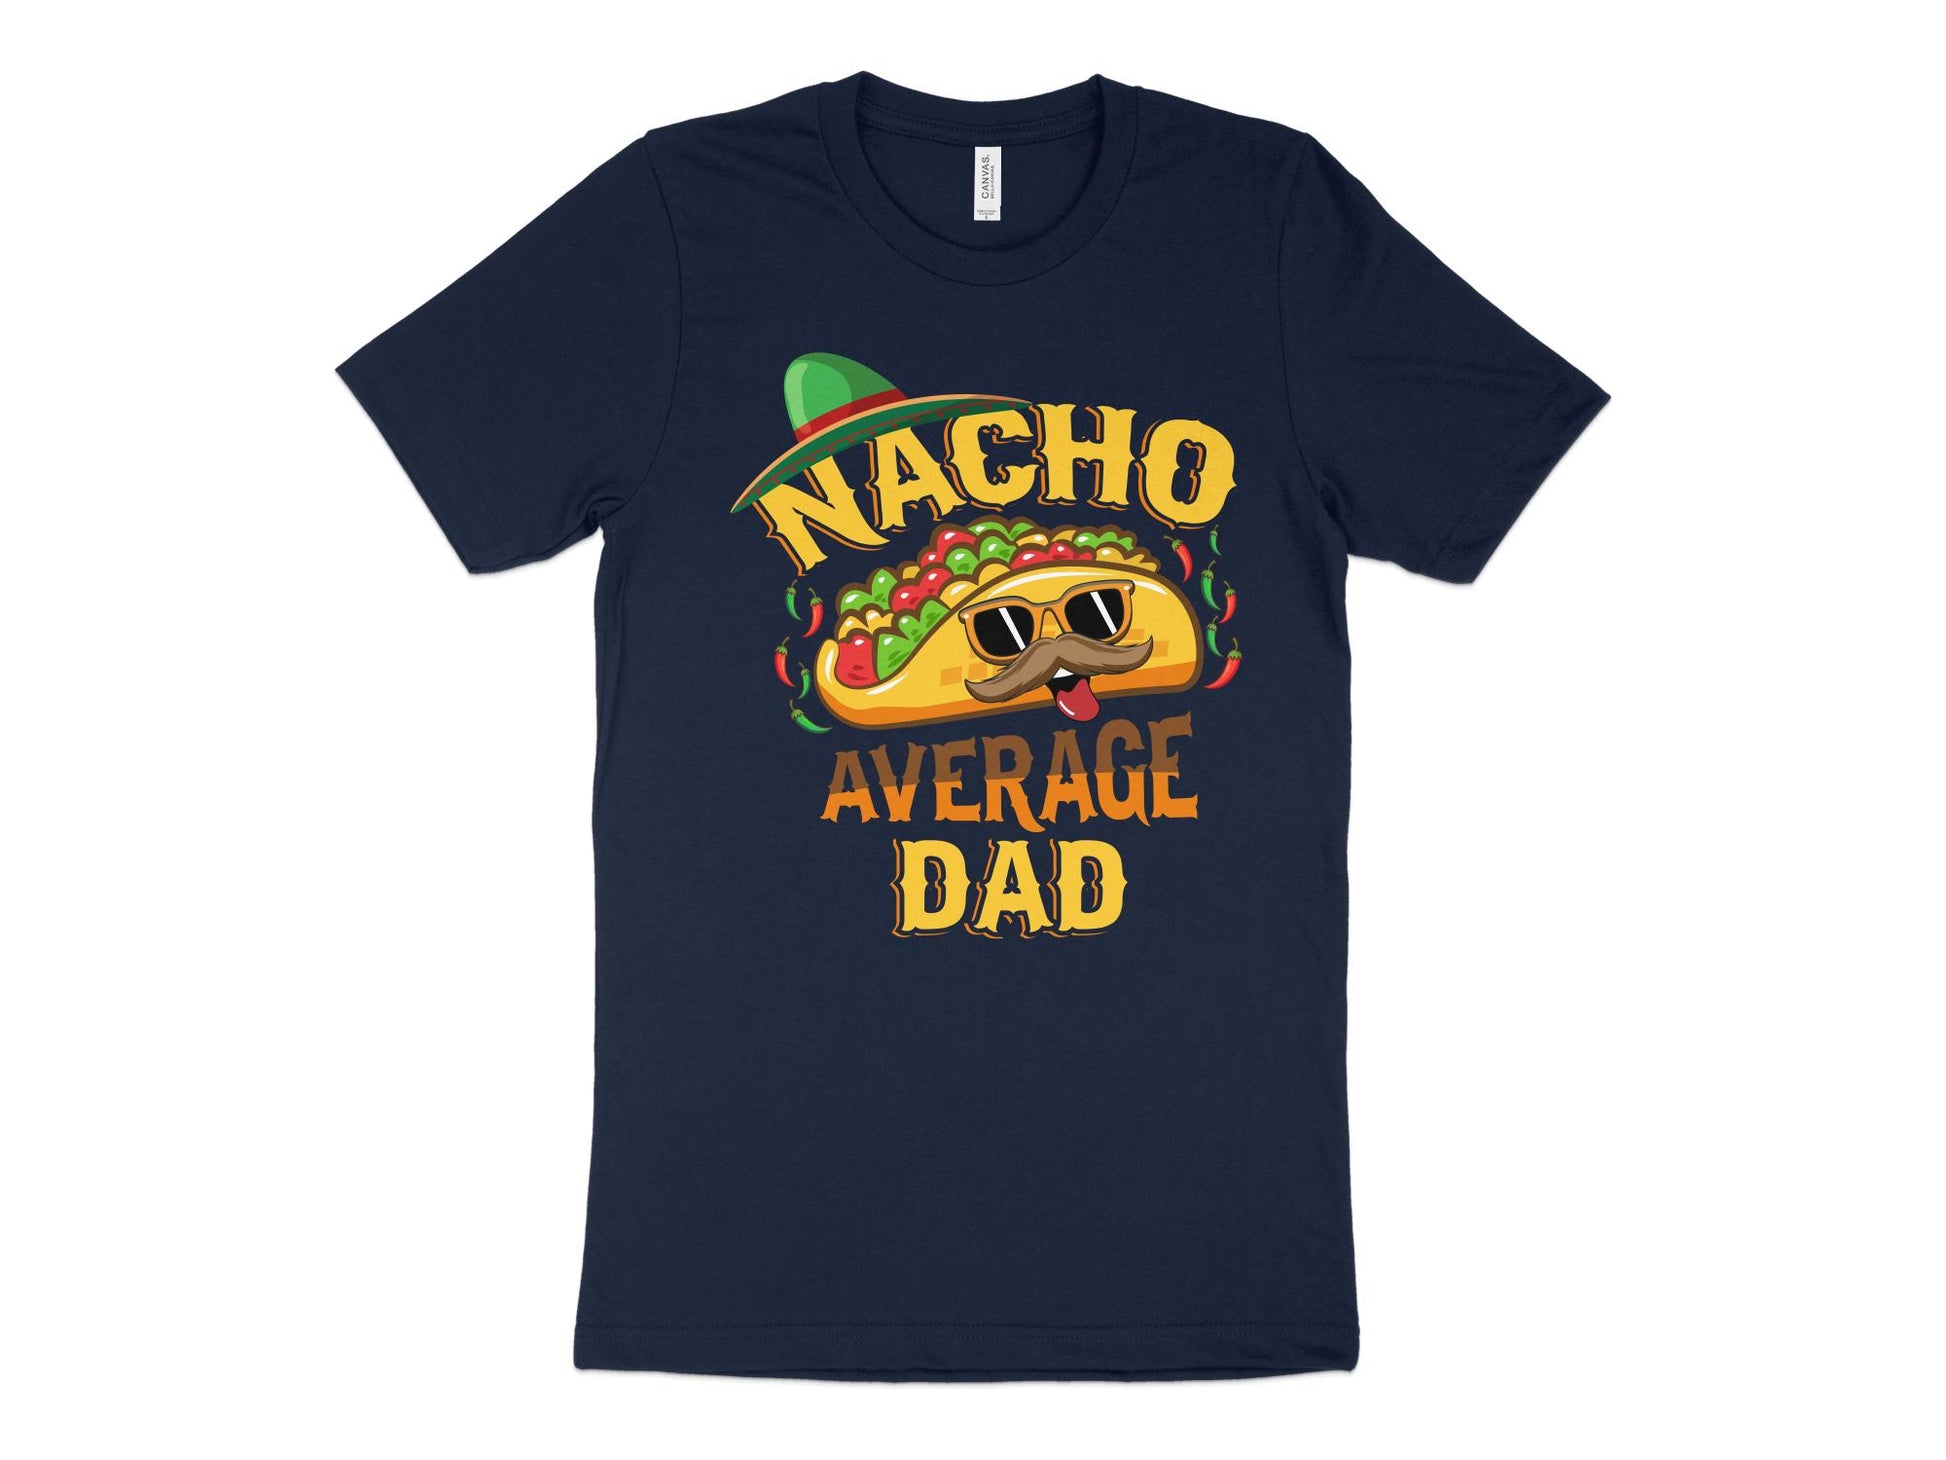 Nacho Average Dad Shirt, navy blue